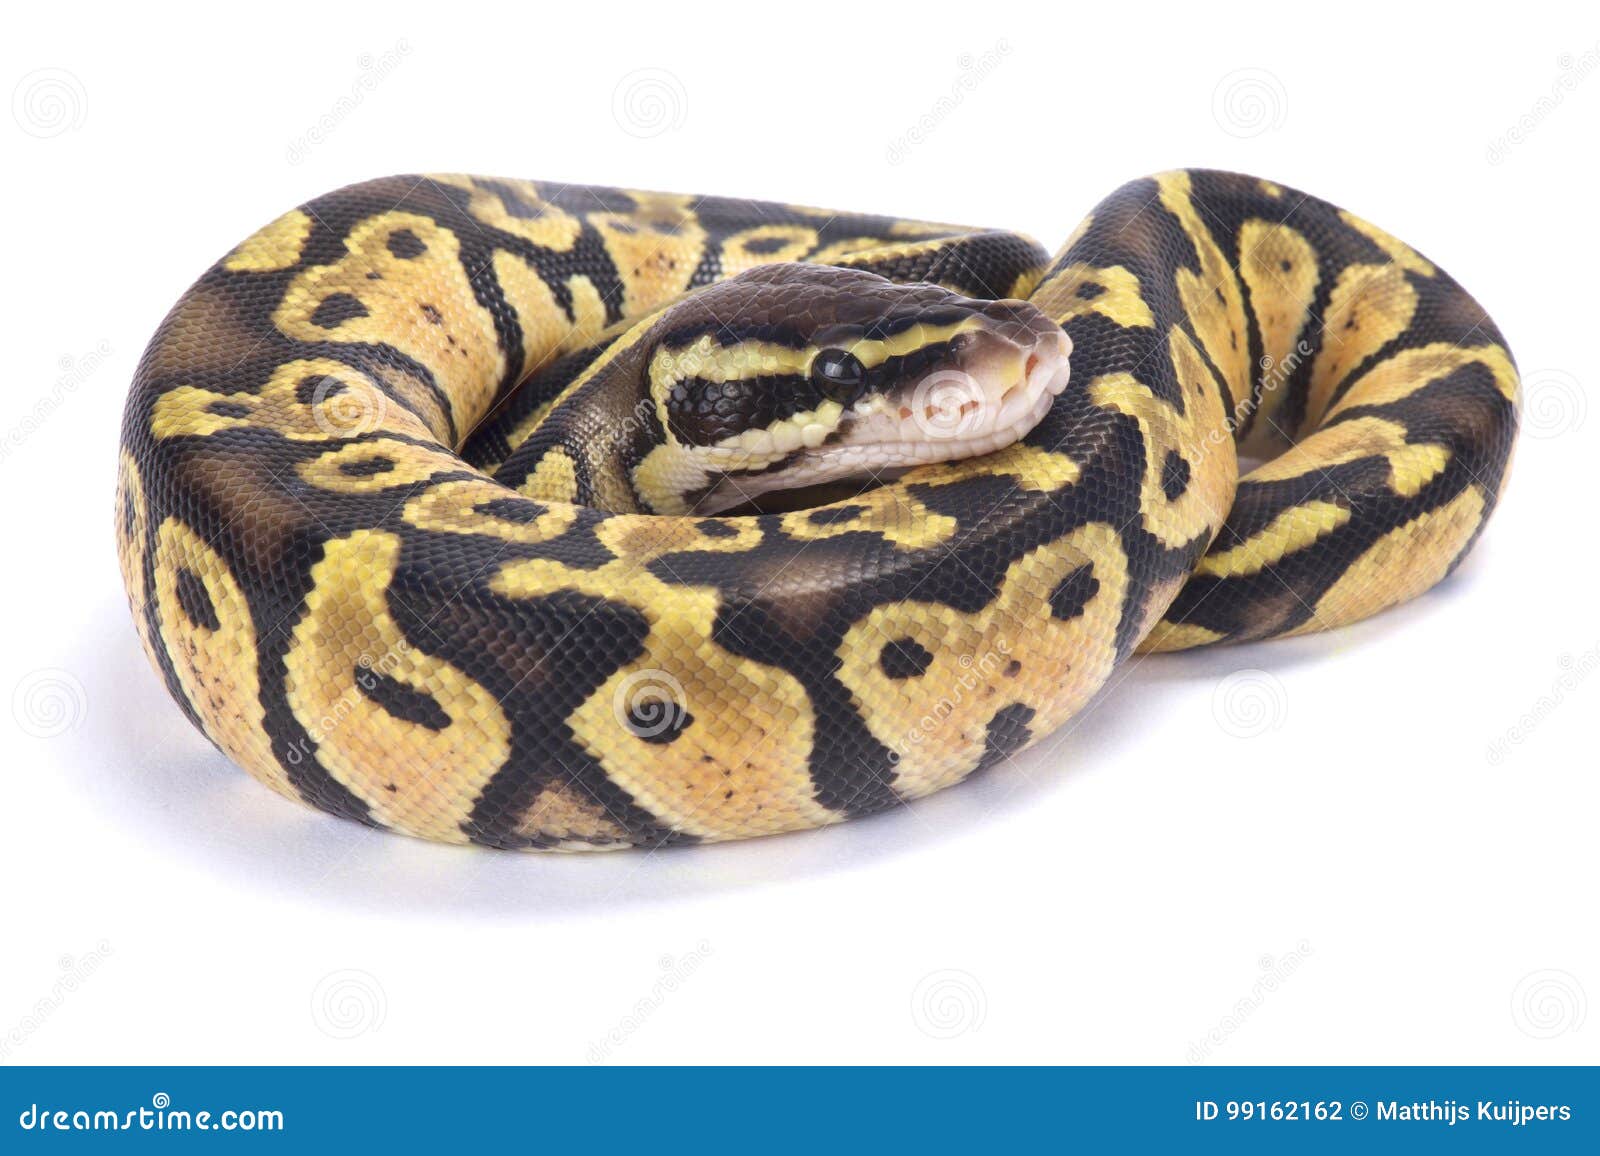 ball python,python regius